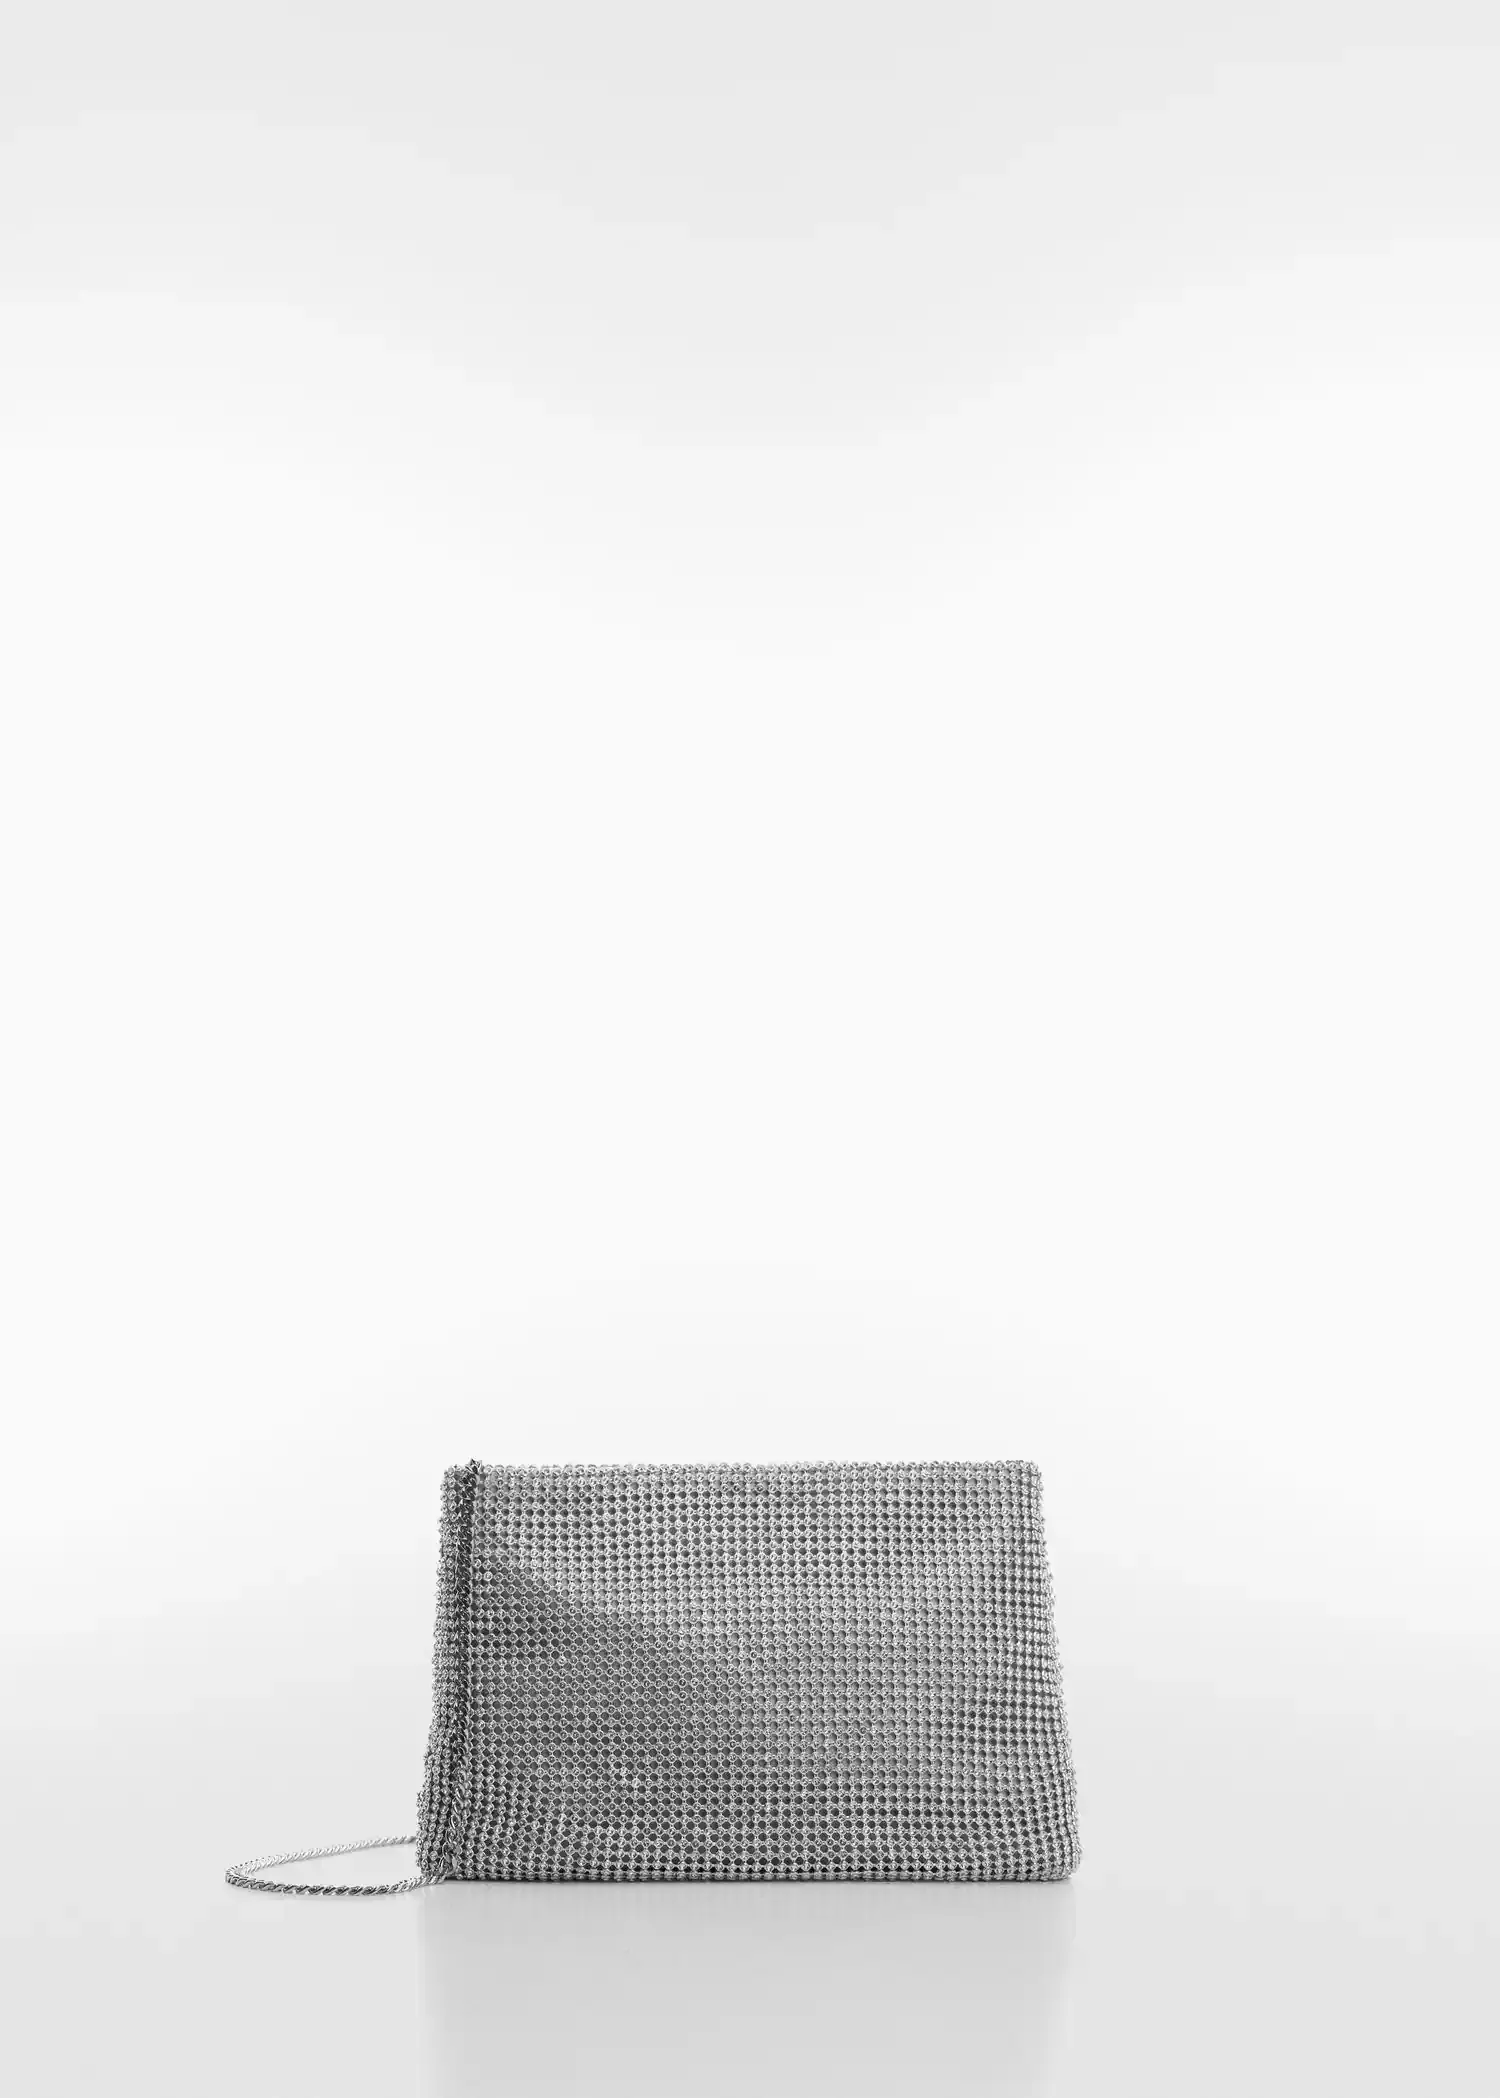 Mango Rhinestone chain bag. a silver purse sitting on top of a white table. 